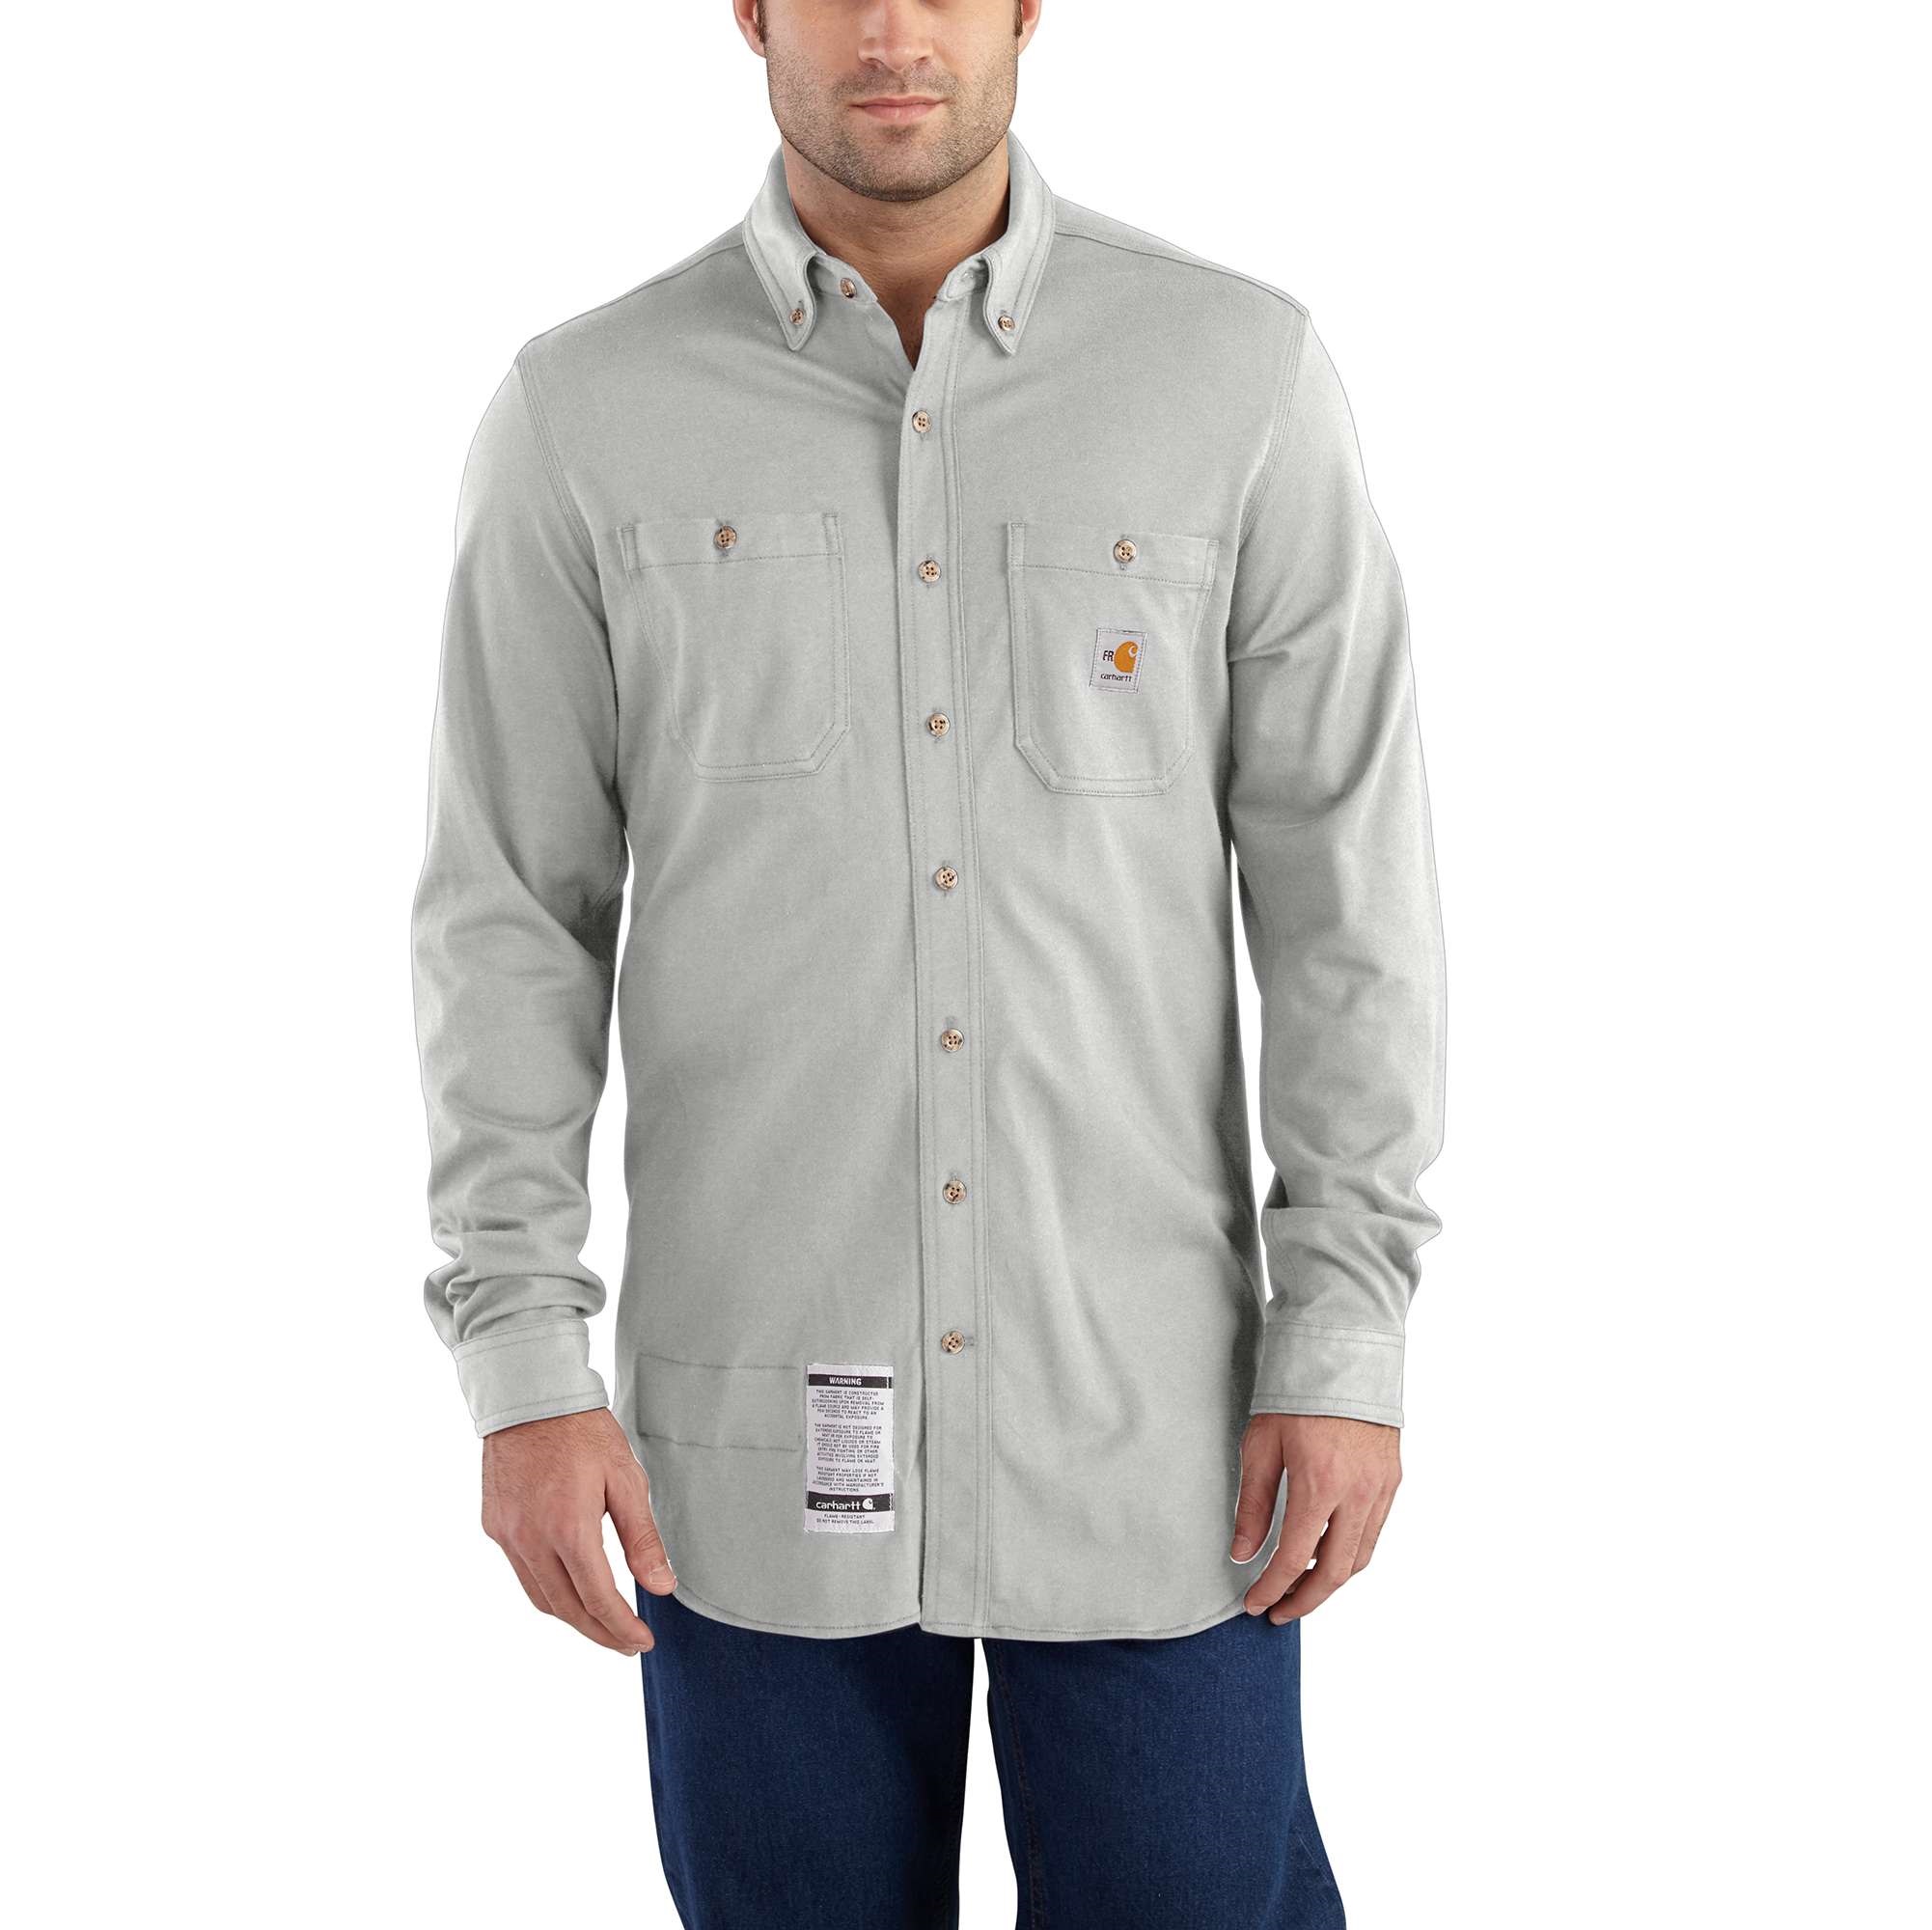 Carhartt Force Cotton Hybrid Shirt in Light Gray